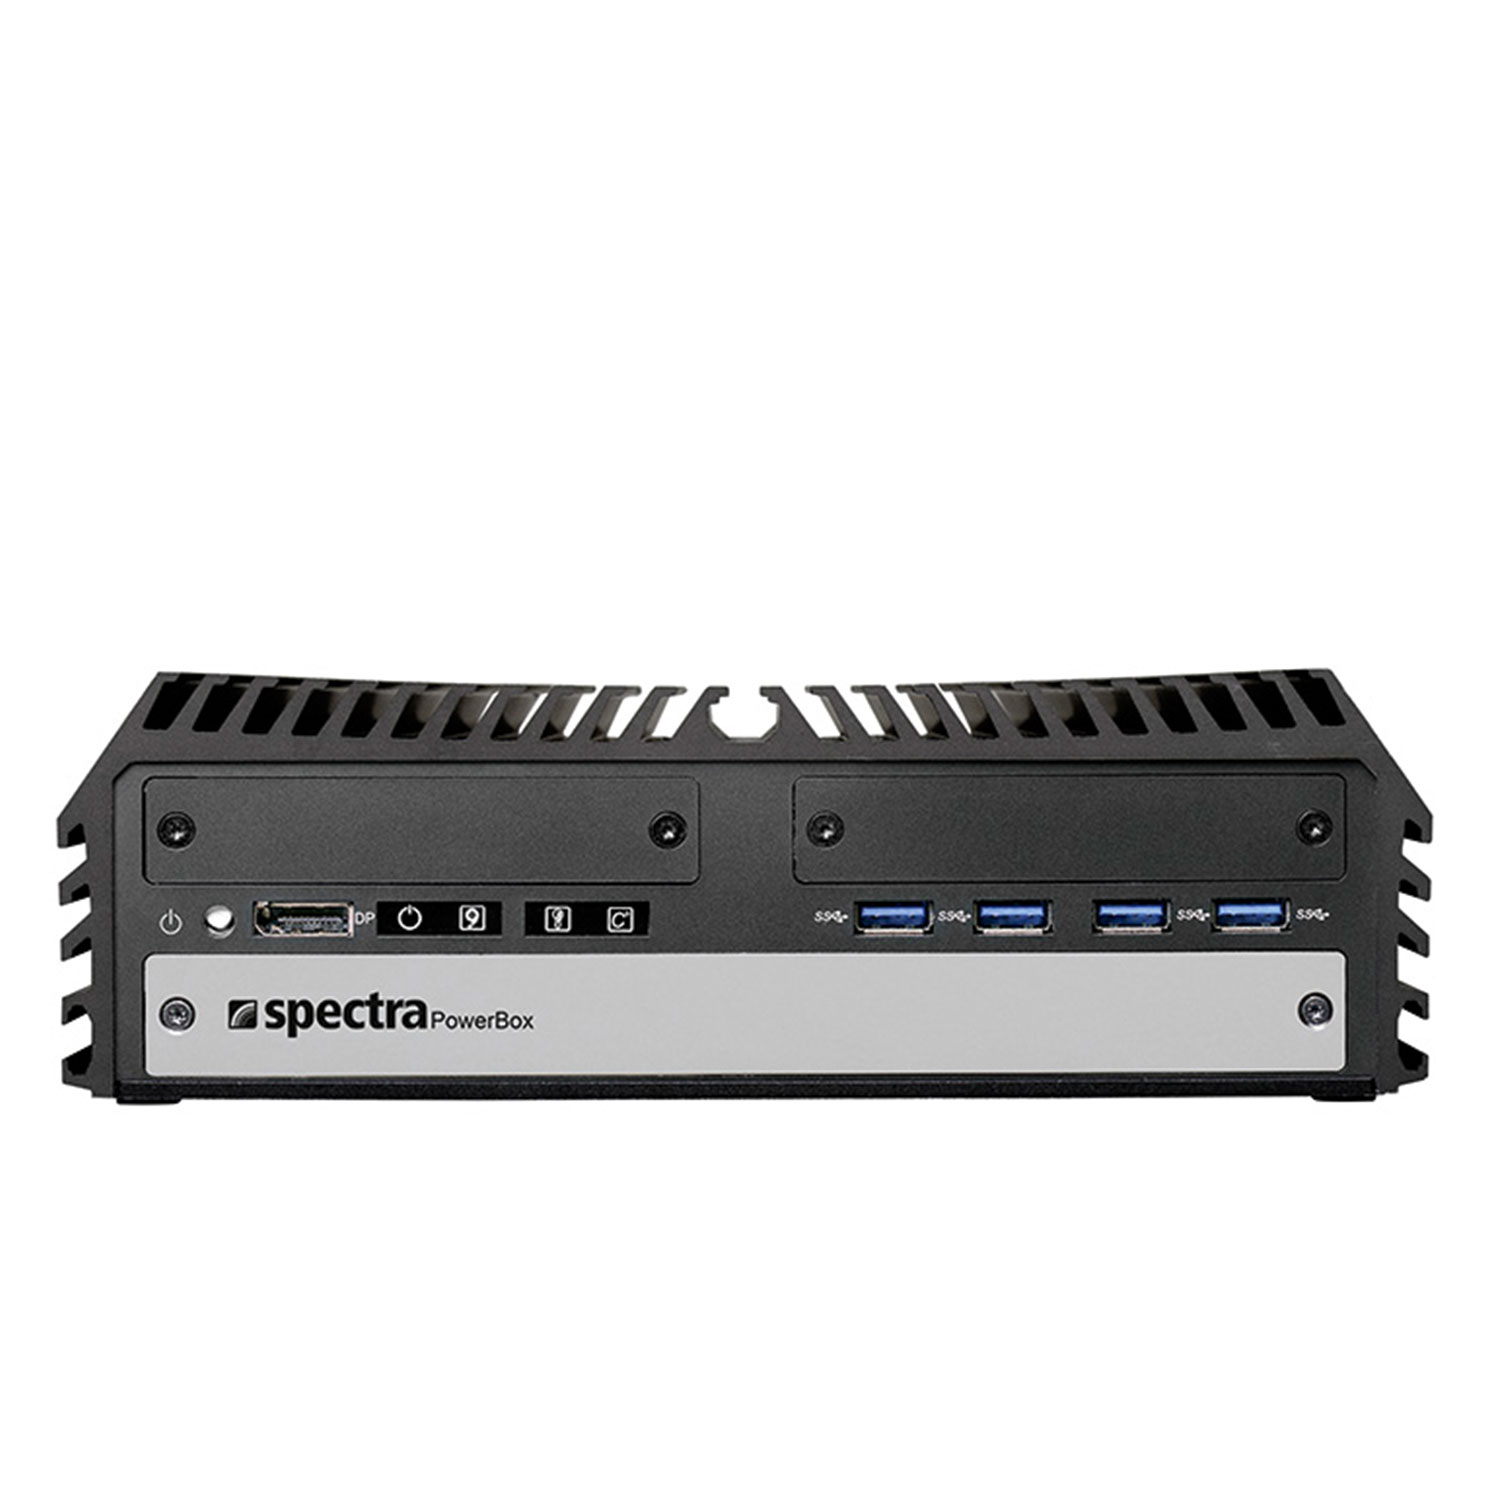 Spectra-PowerBox-400-Mini-PC